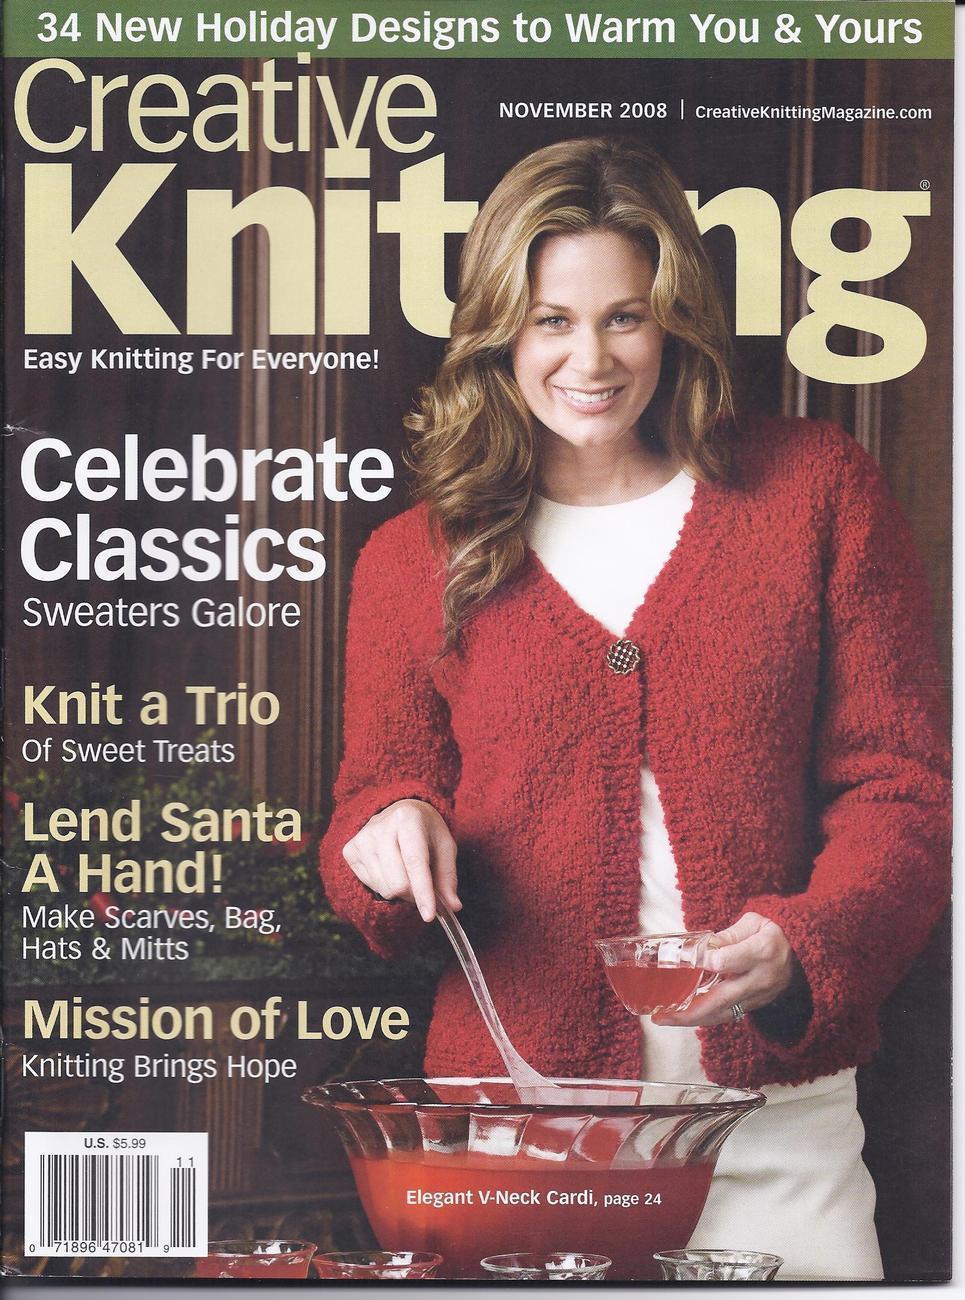 Creative Knitting Magazine November 2008 - $3.99